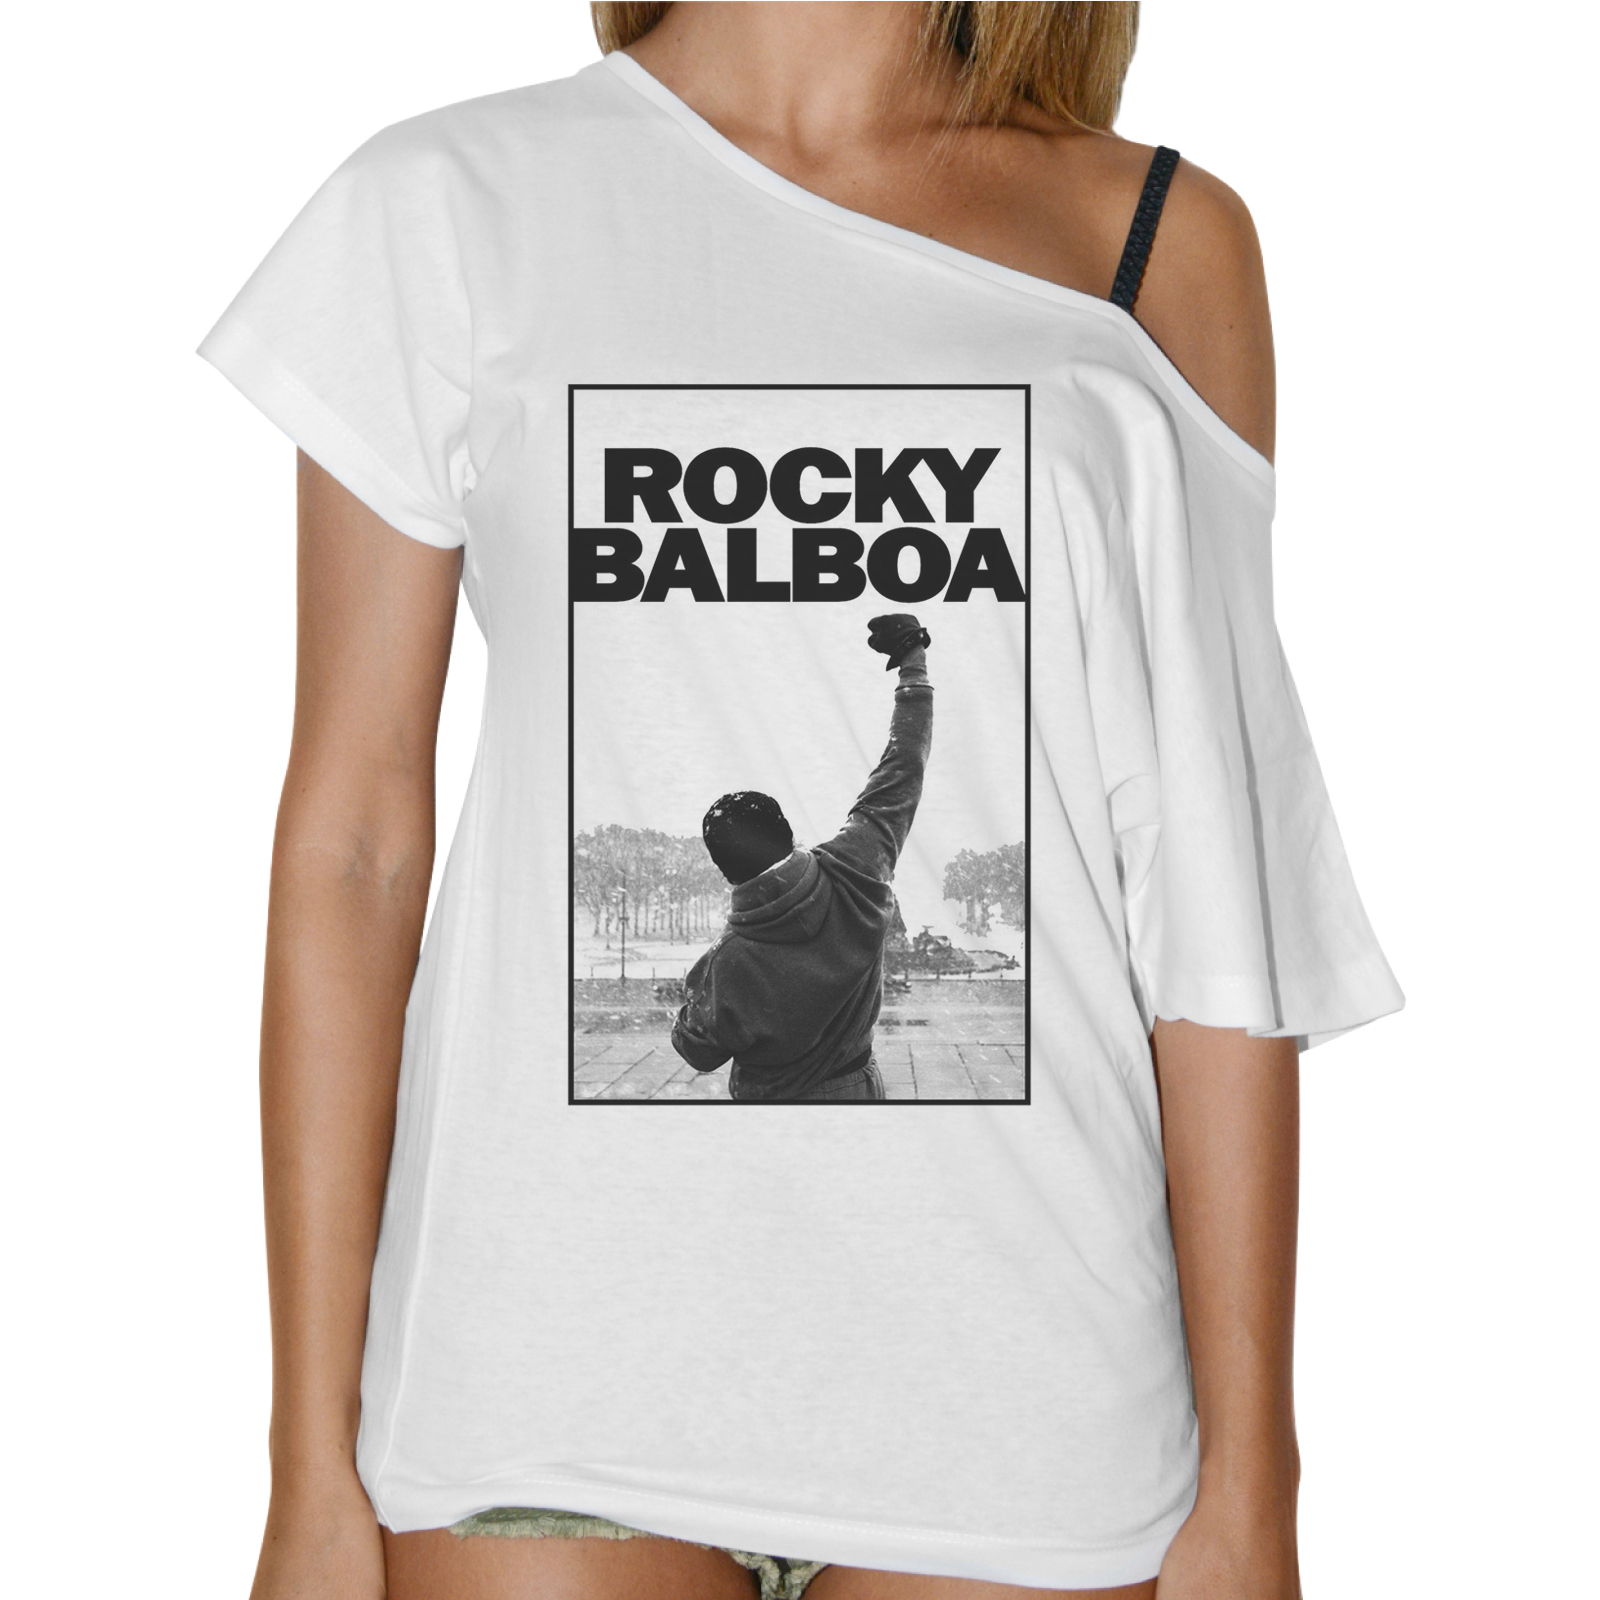 T-Shirt Donna Collo Barca ROCKY LOCANDINA